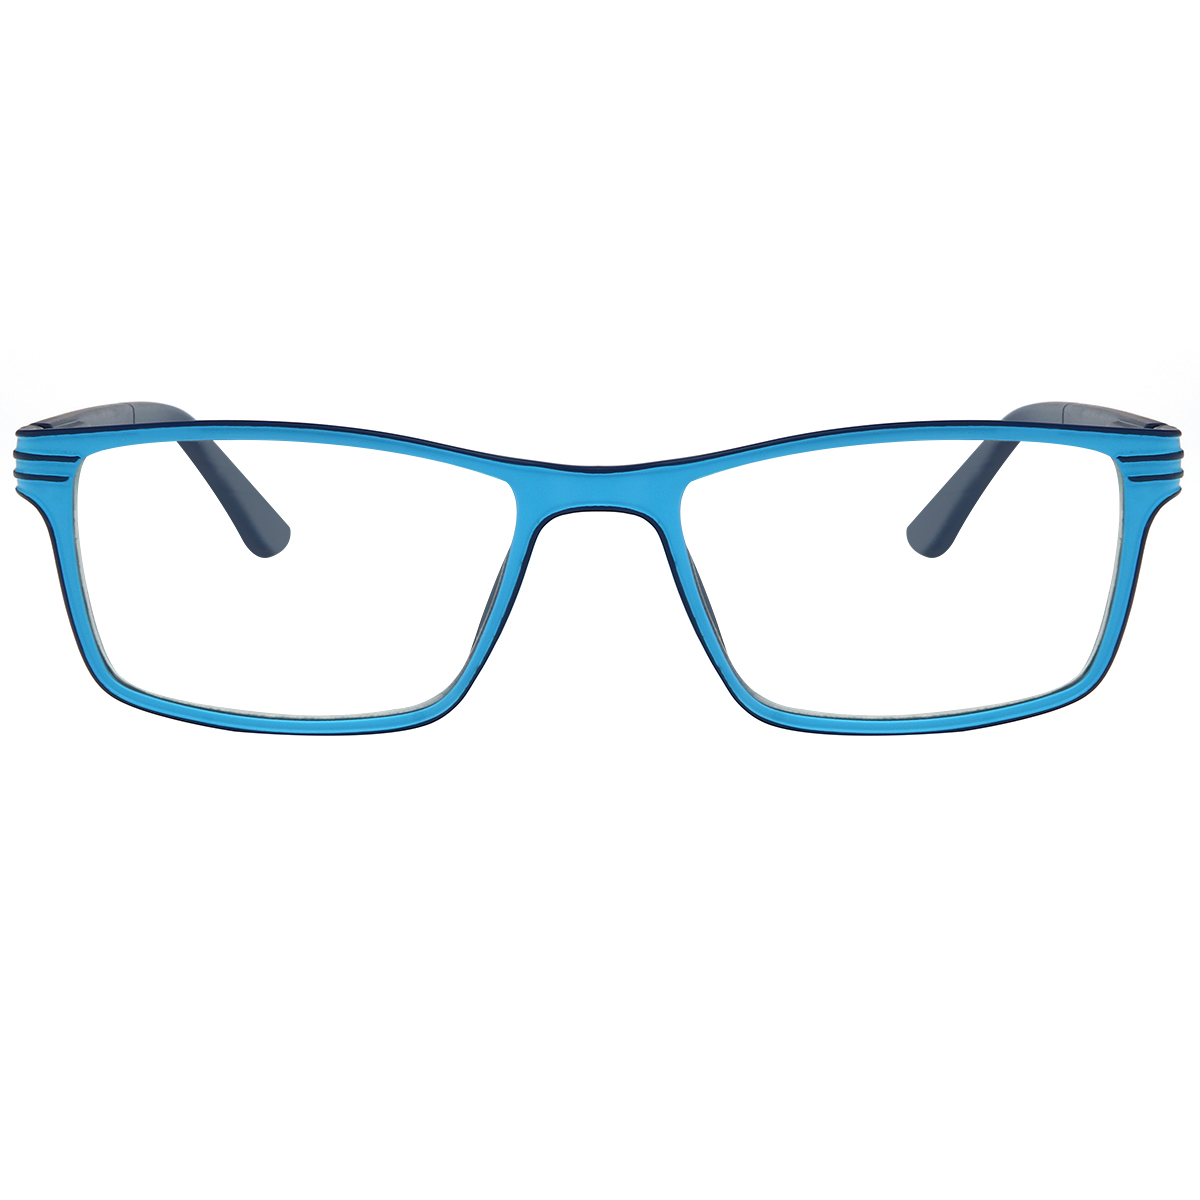 rectangle reading-glasses #513 - blue